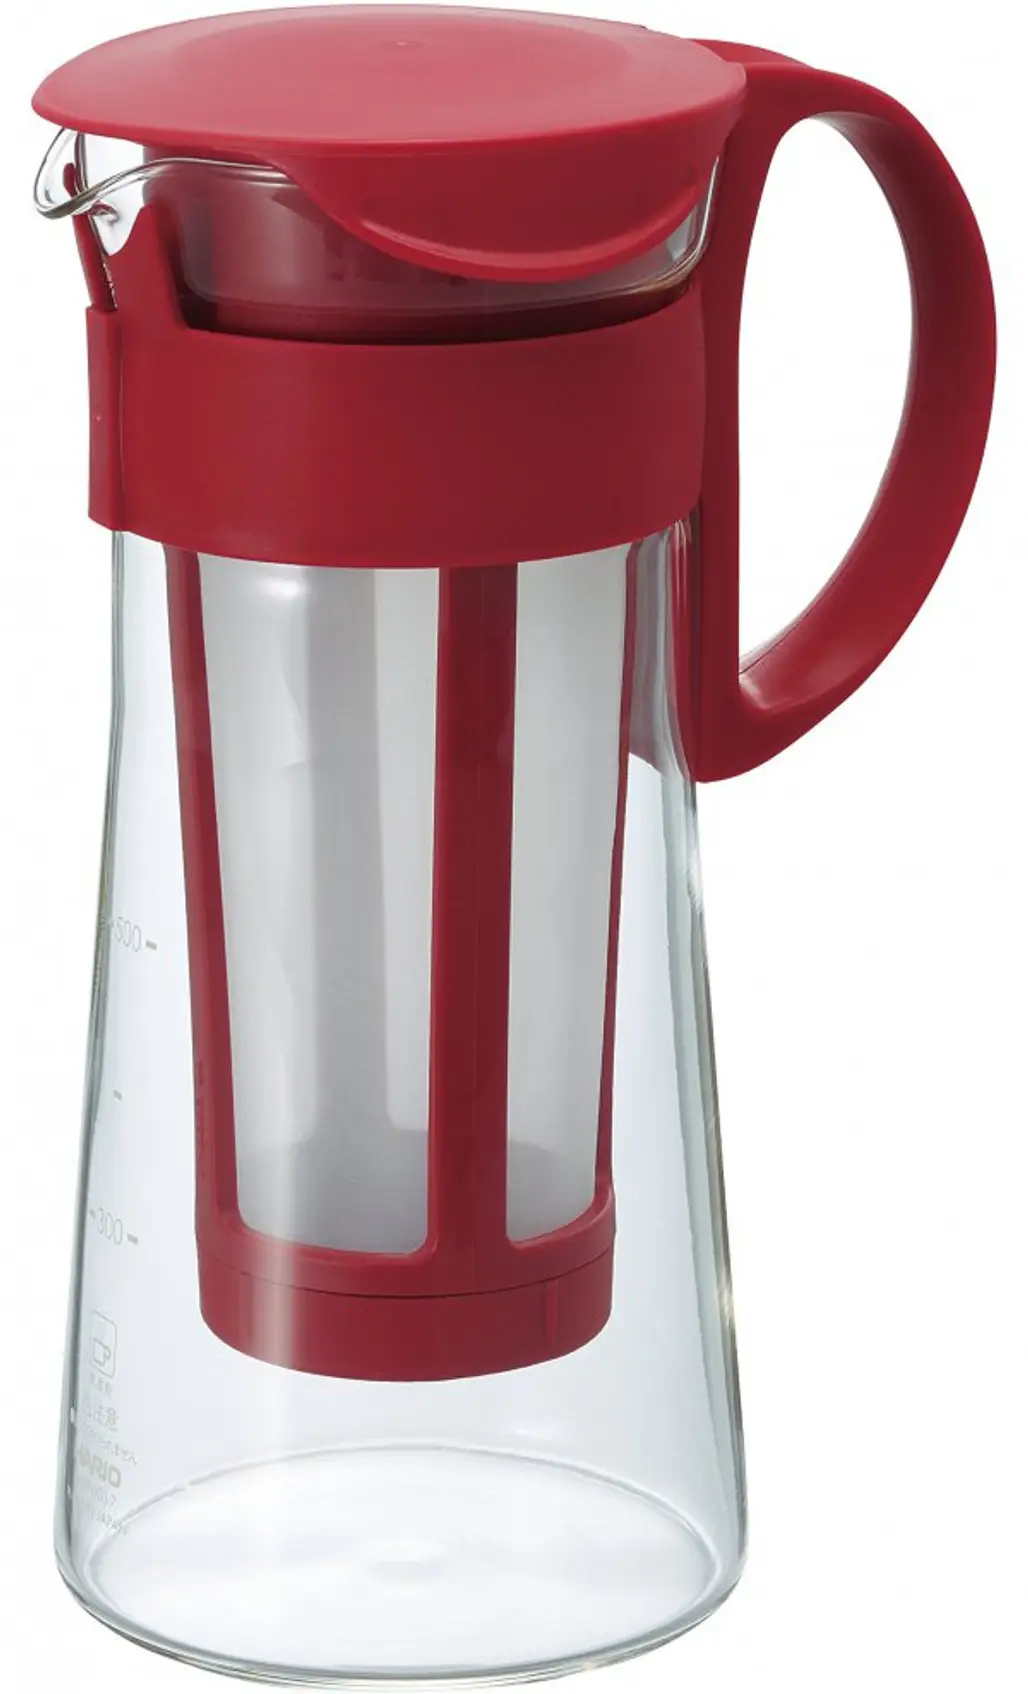 mug, cup, small appliance, kettle, drinkware,